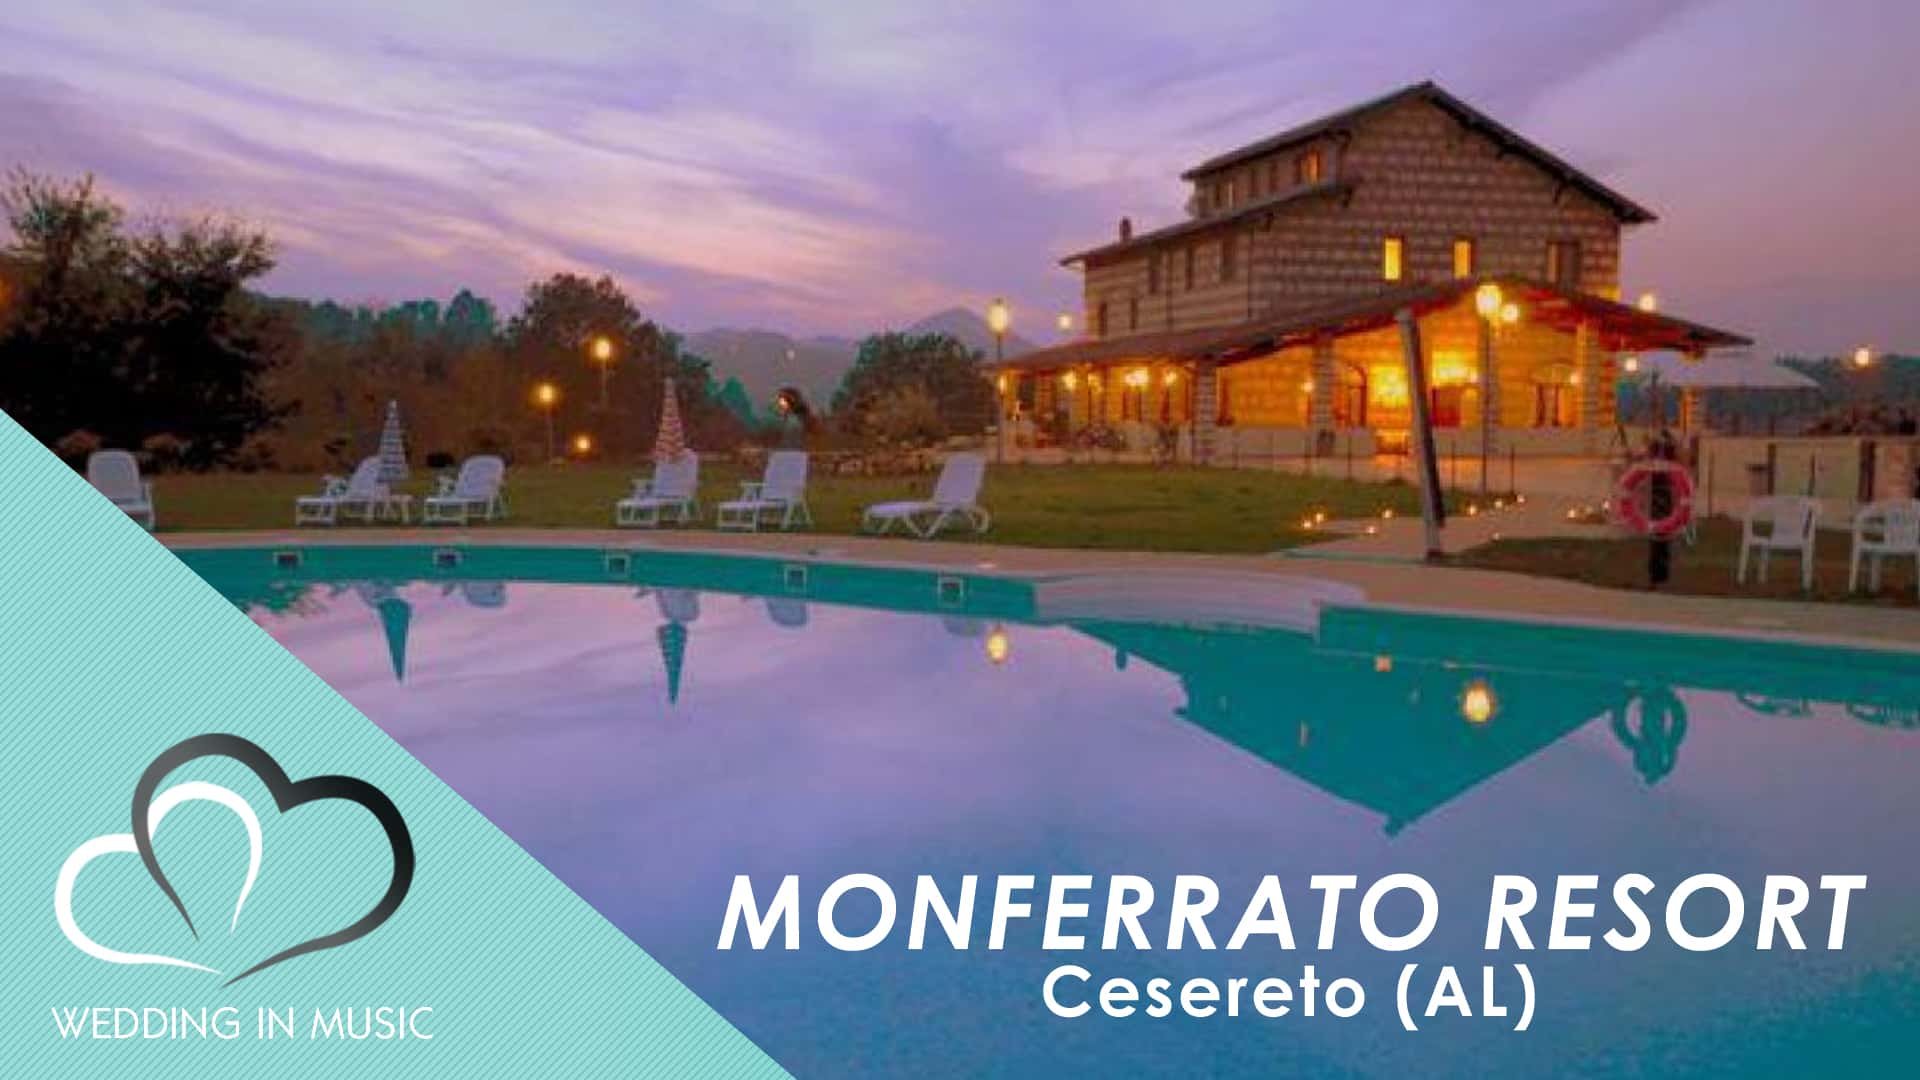 monferrato resort location per matrimonio